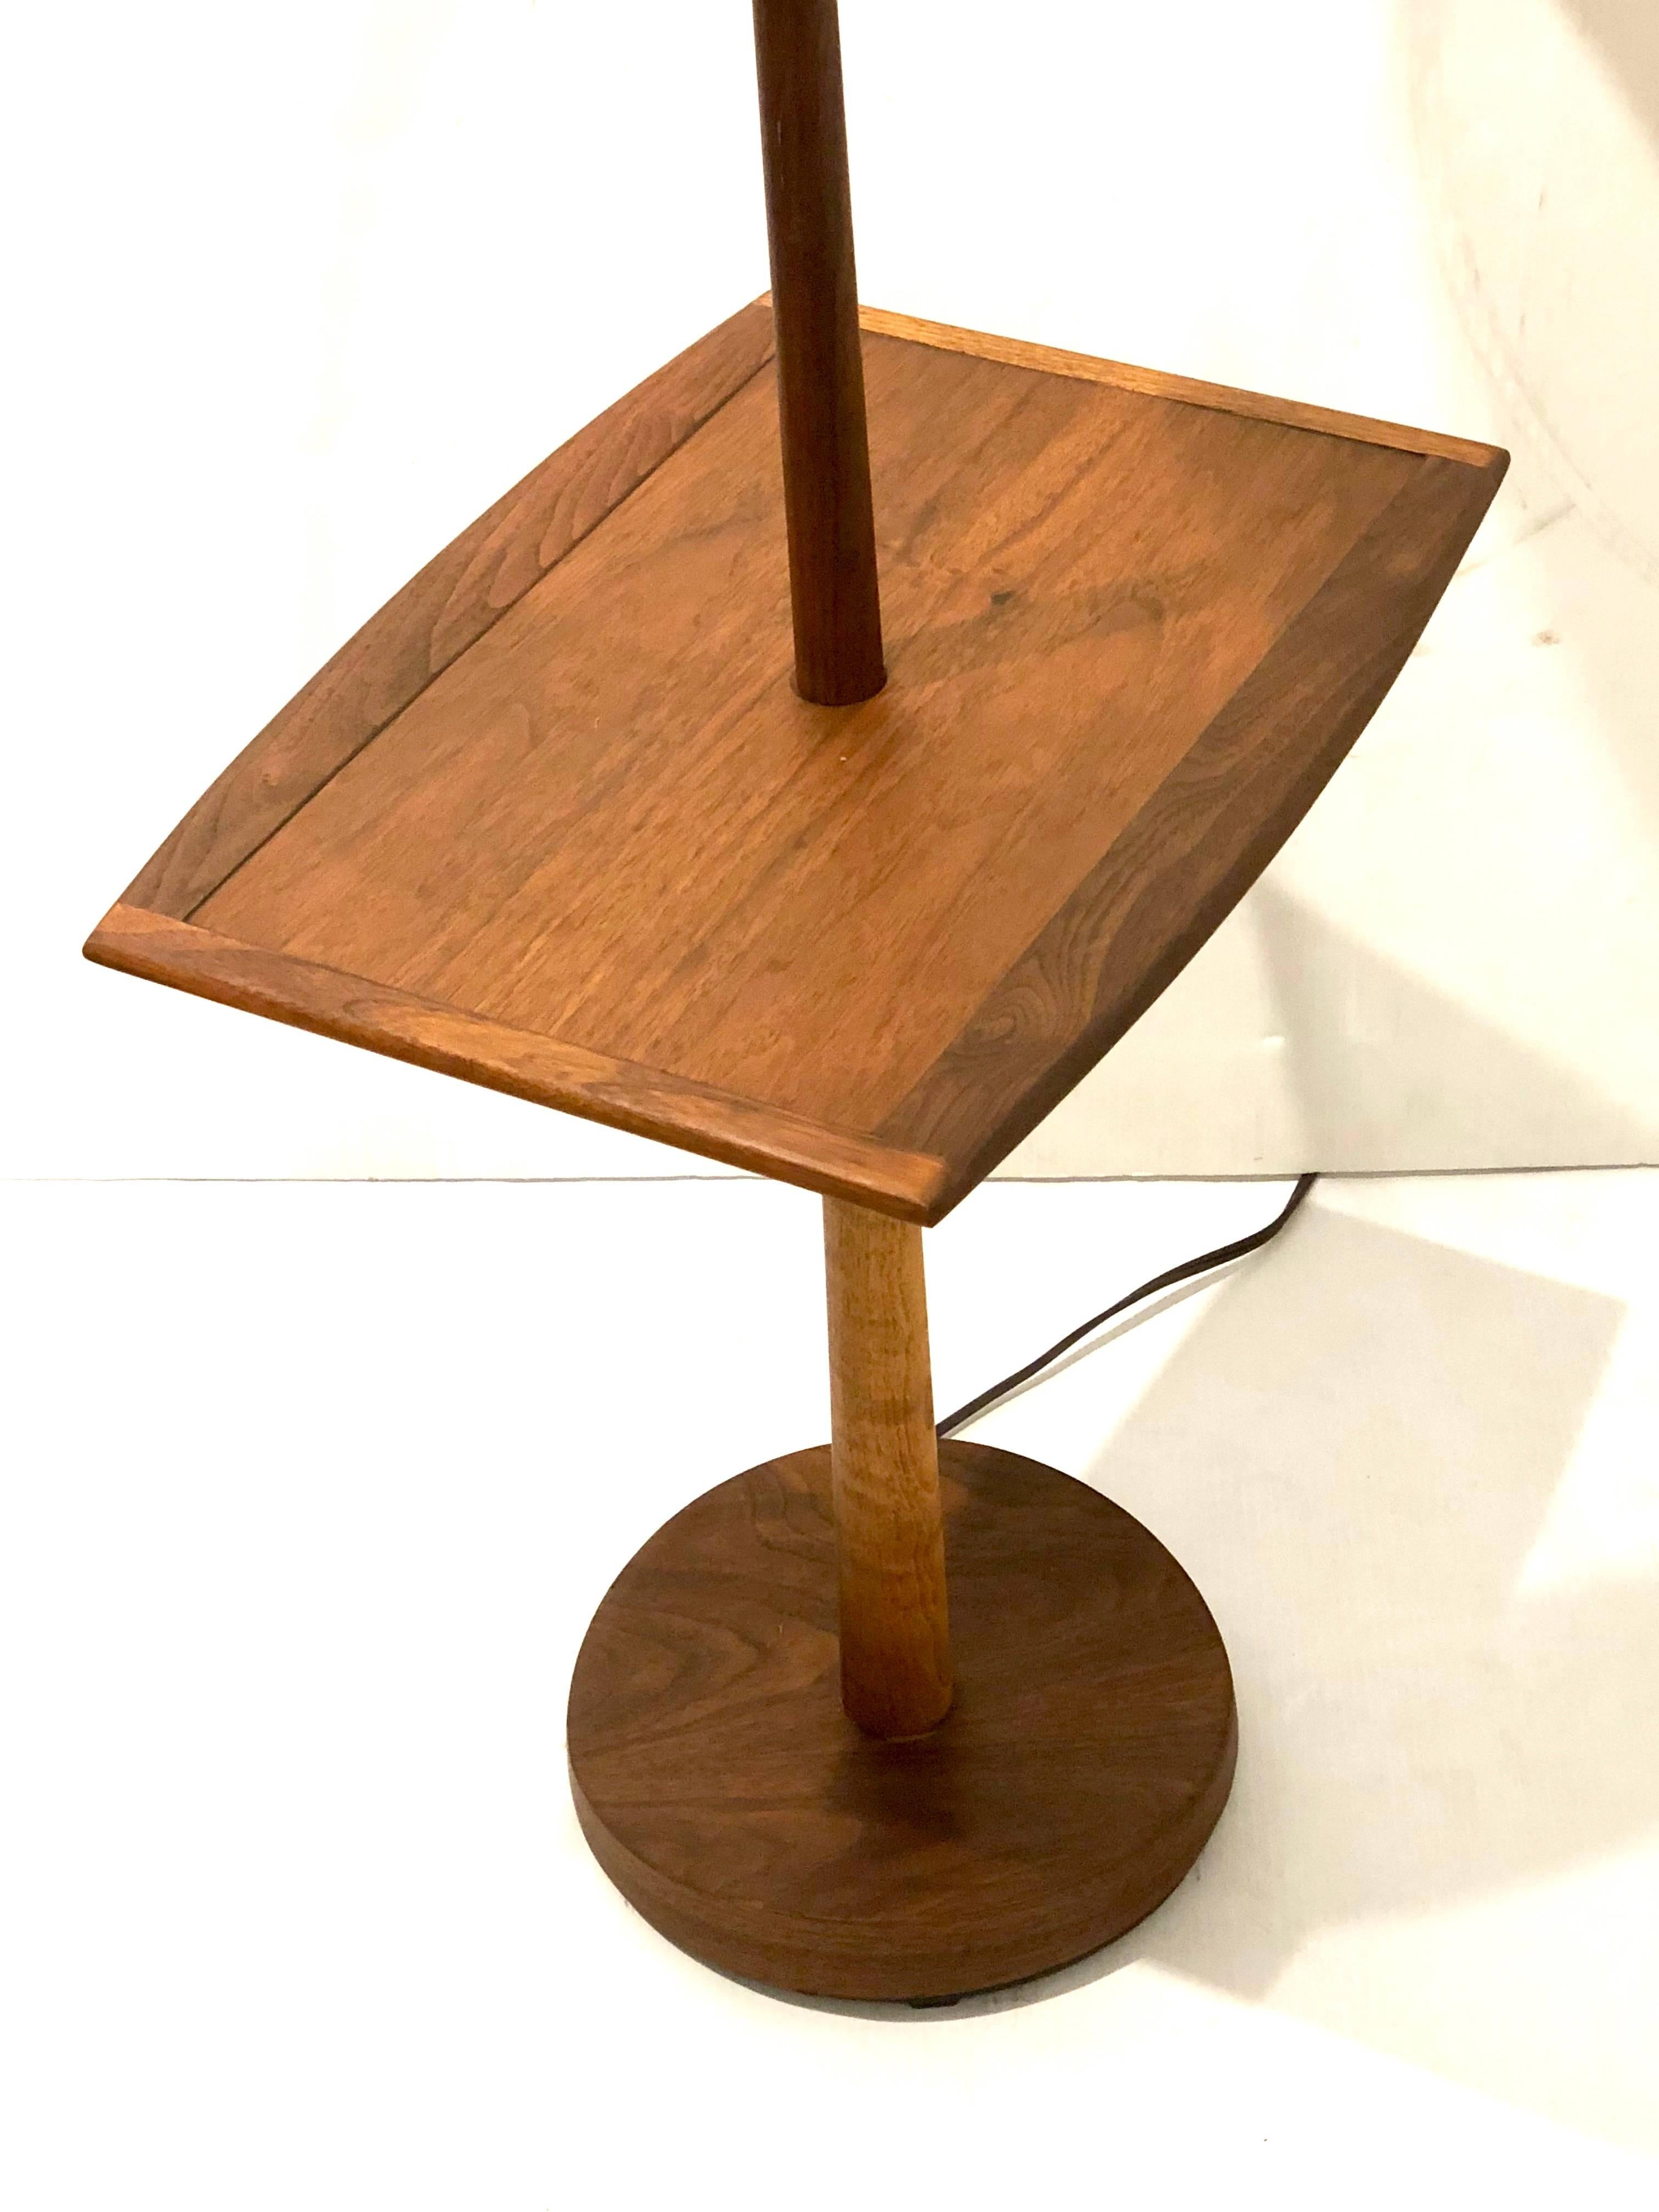 20th Century American Mid-Century Modern Walnut Table Lamp